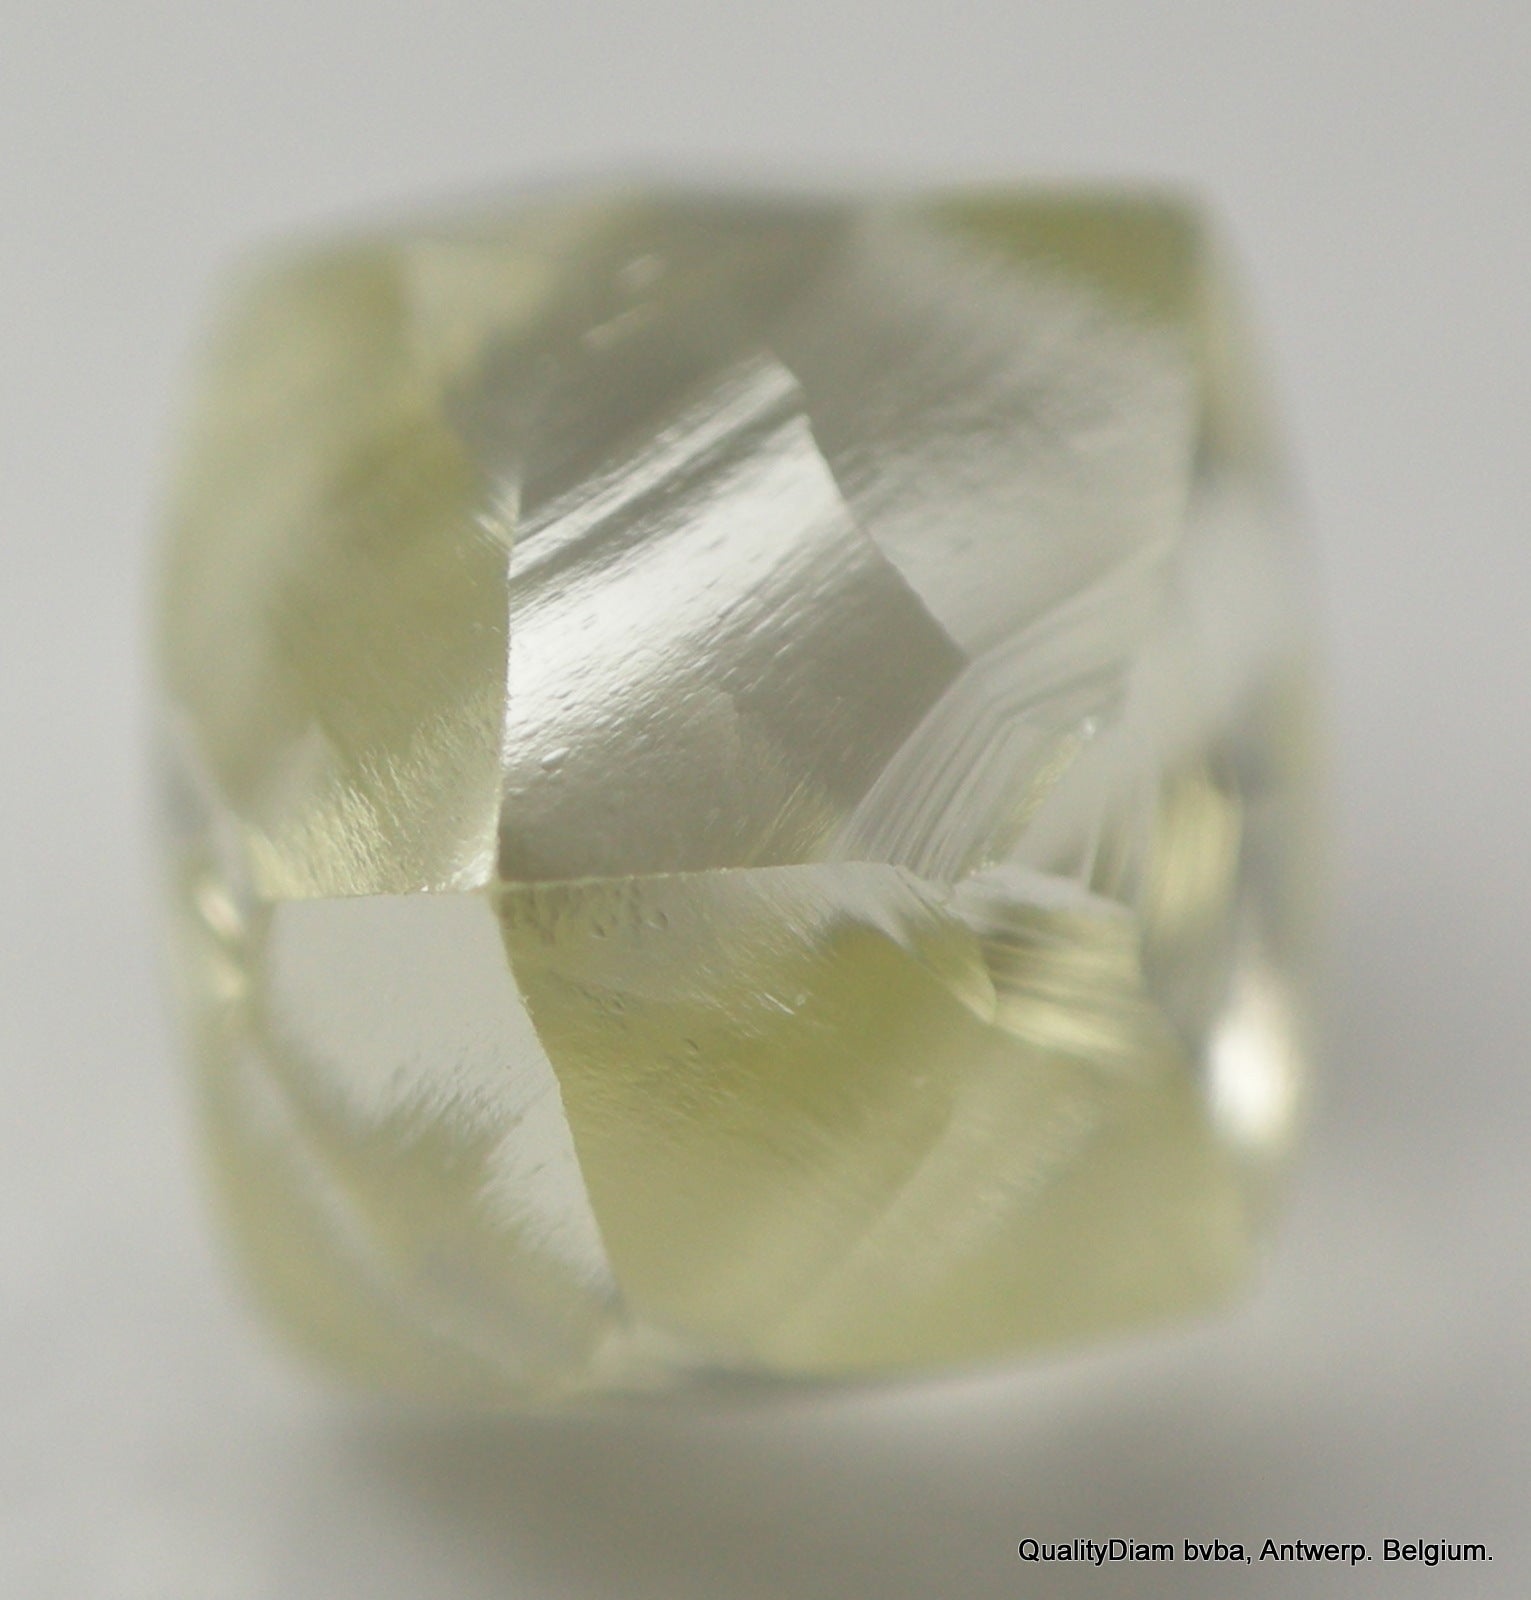 K VVS1 0.43 Carat Raw Gemstone feel Uncut Genuine Diamond in a Rare Tetra shape